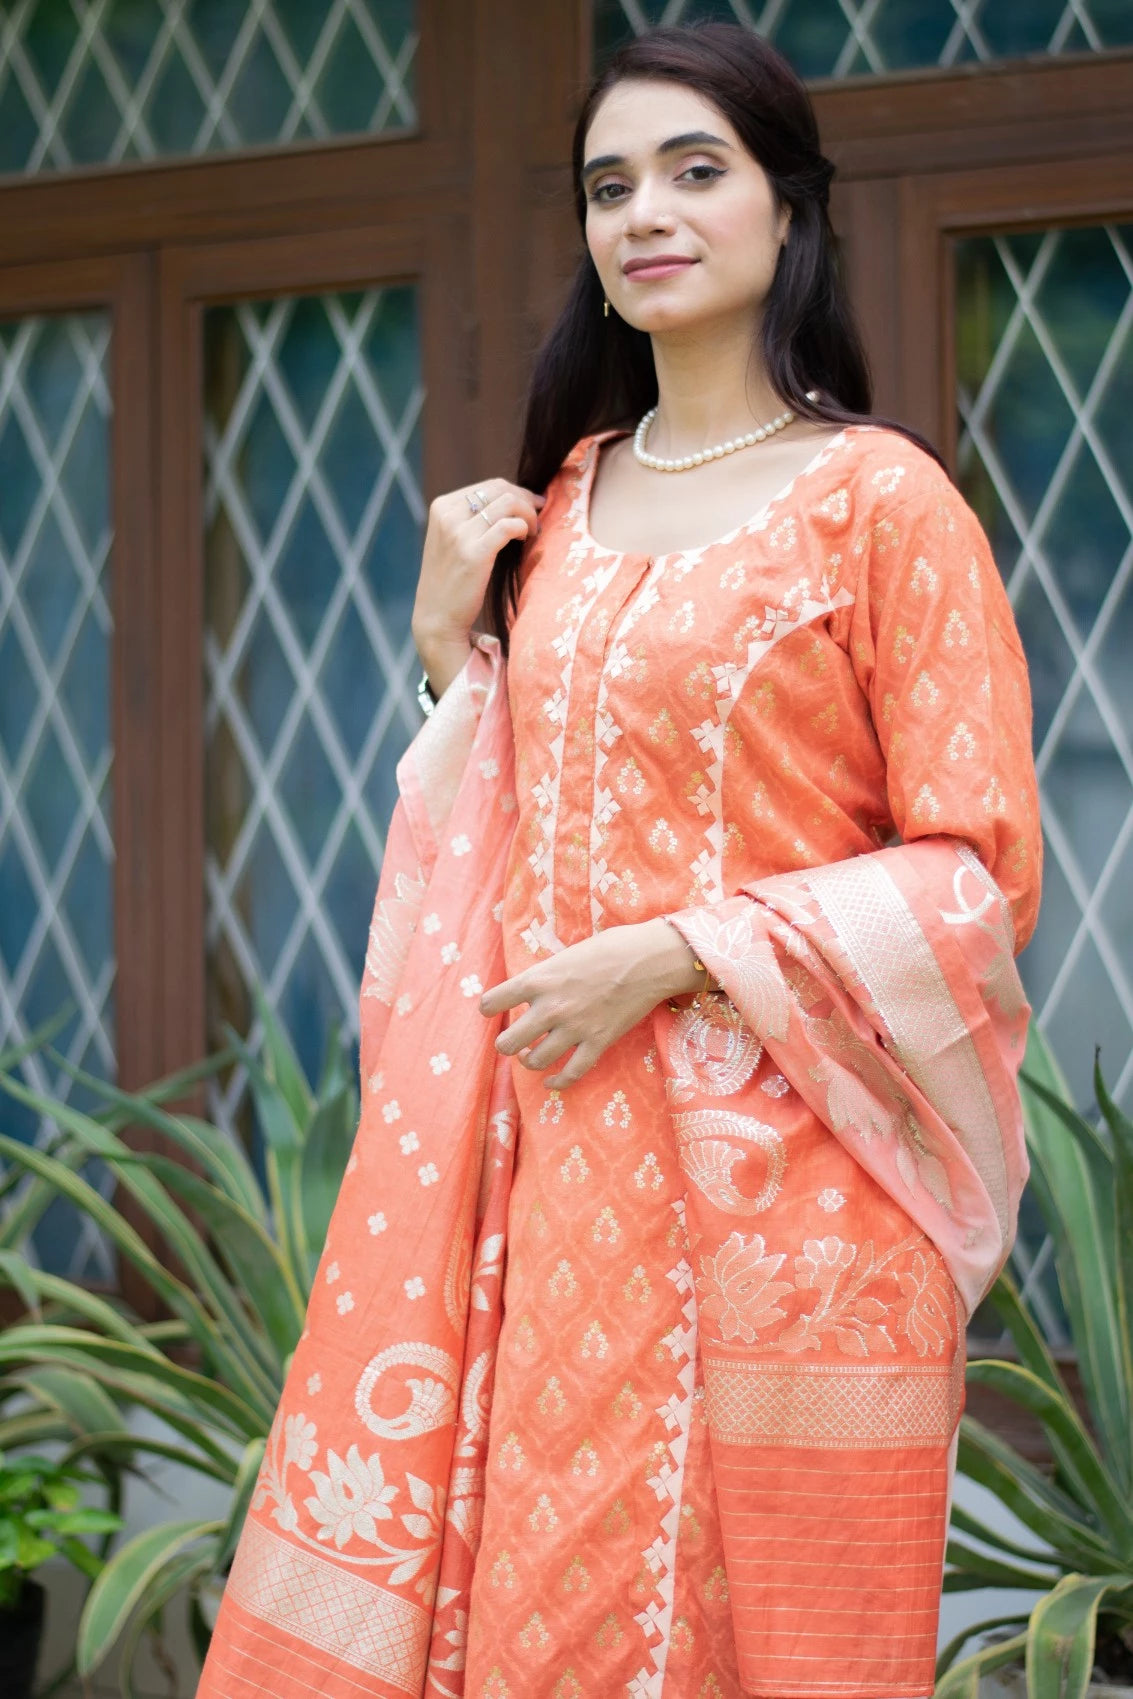 A female model wearing an orange silk kurta and matching trousers